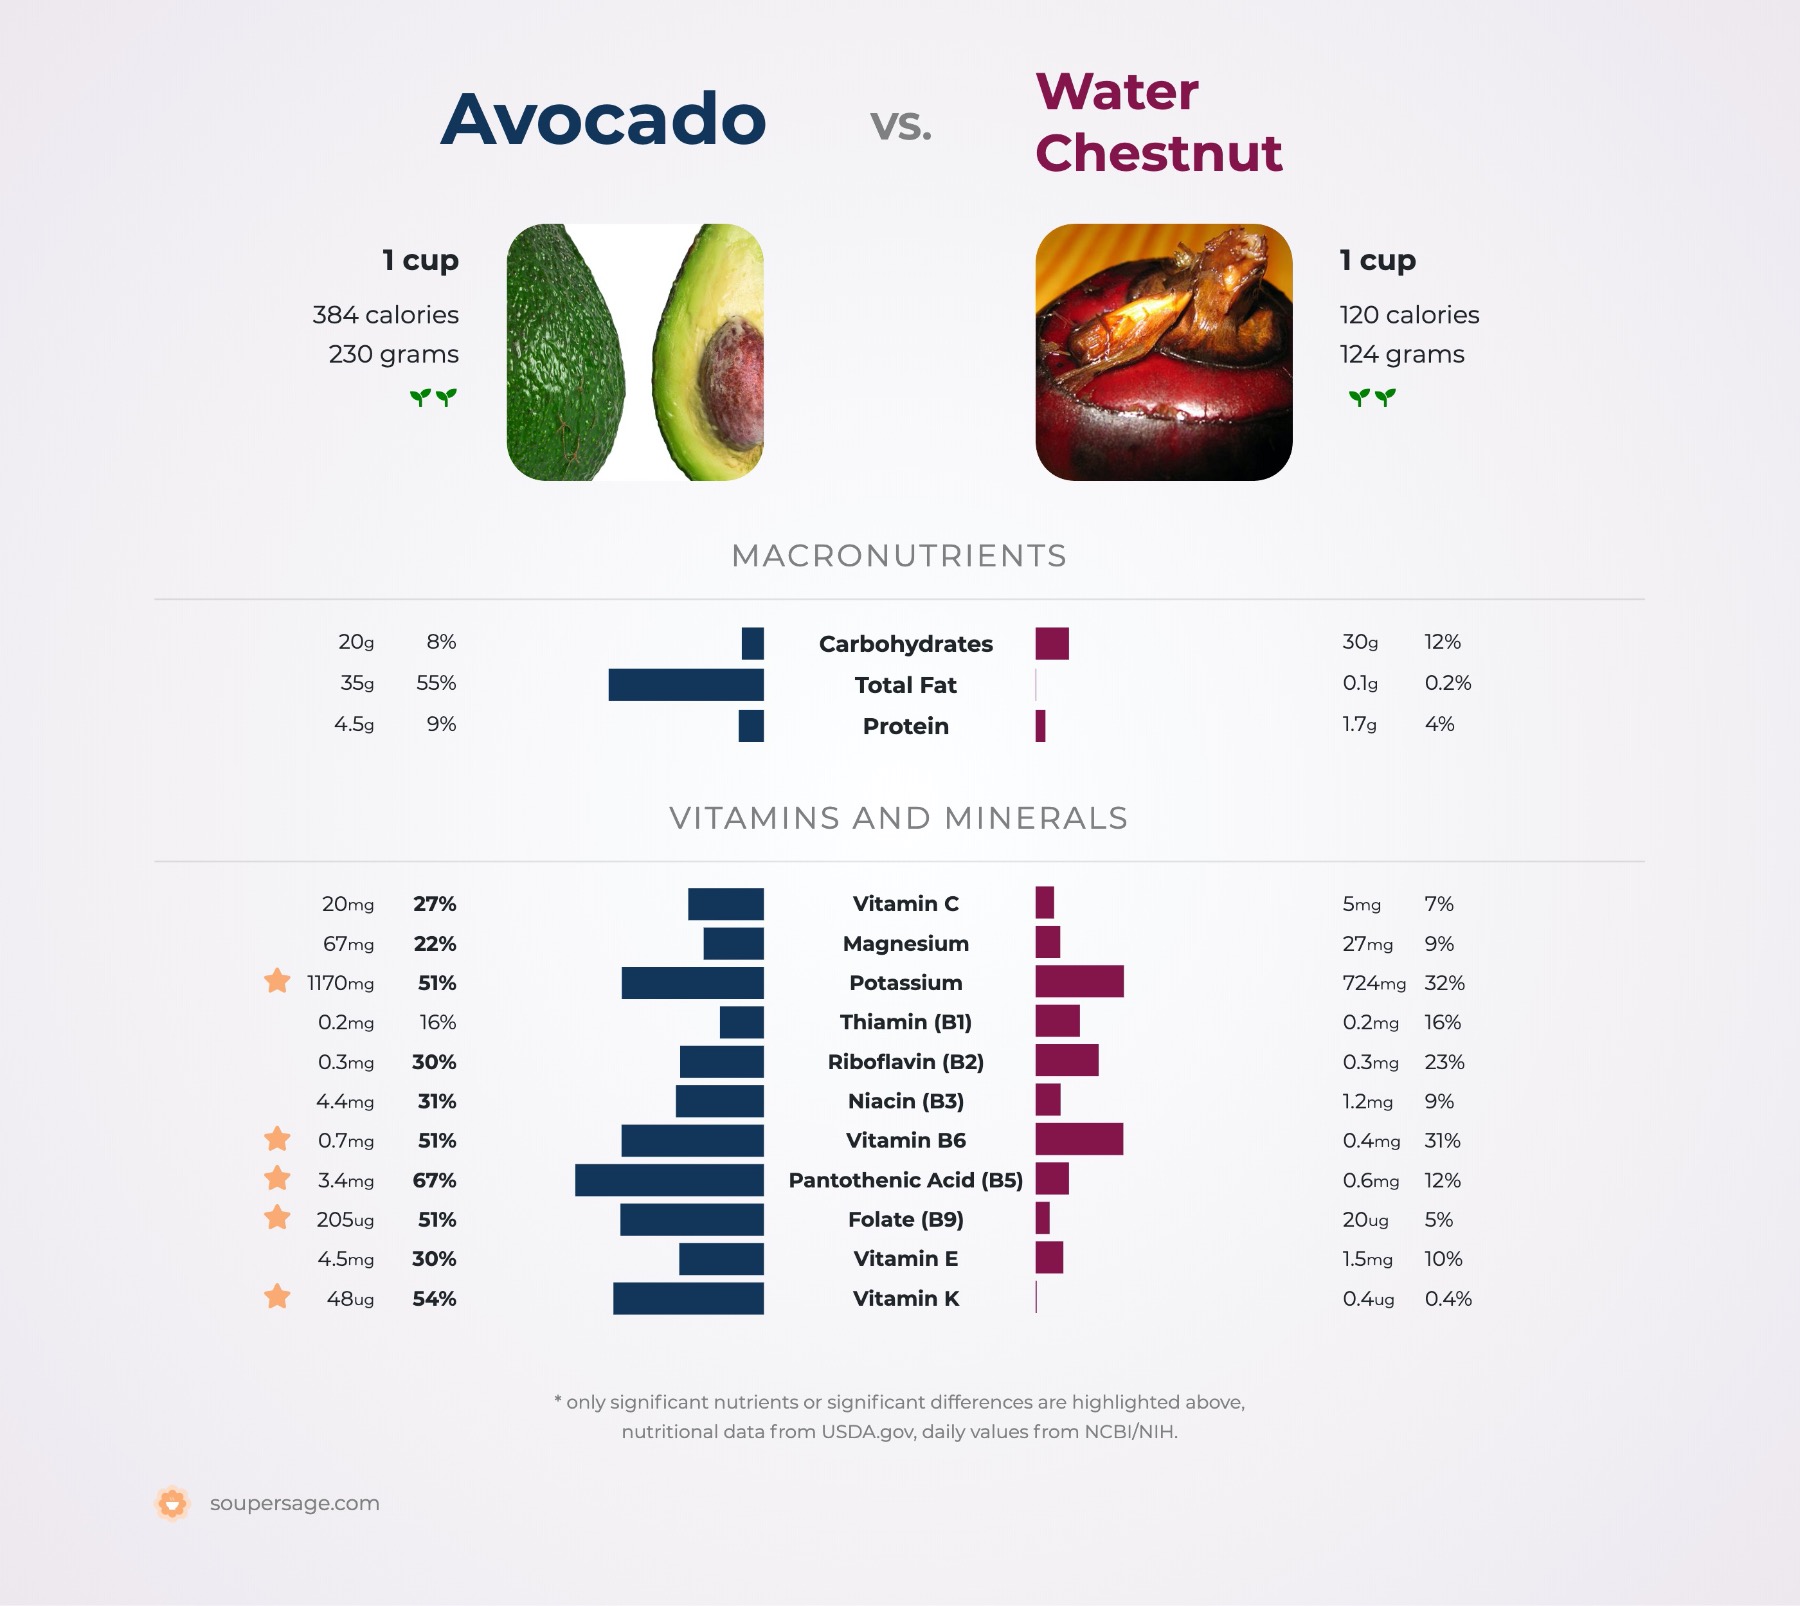 nutrition comparison of avocado vs. water chestnut